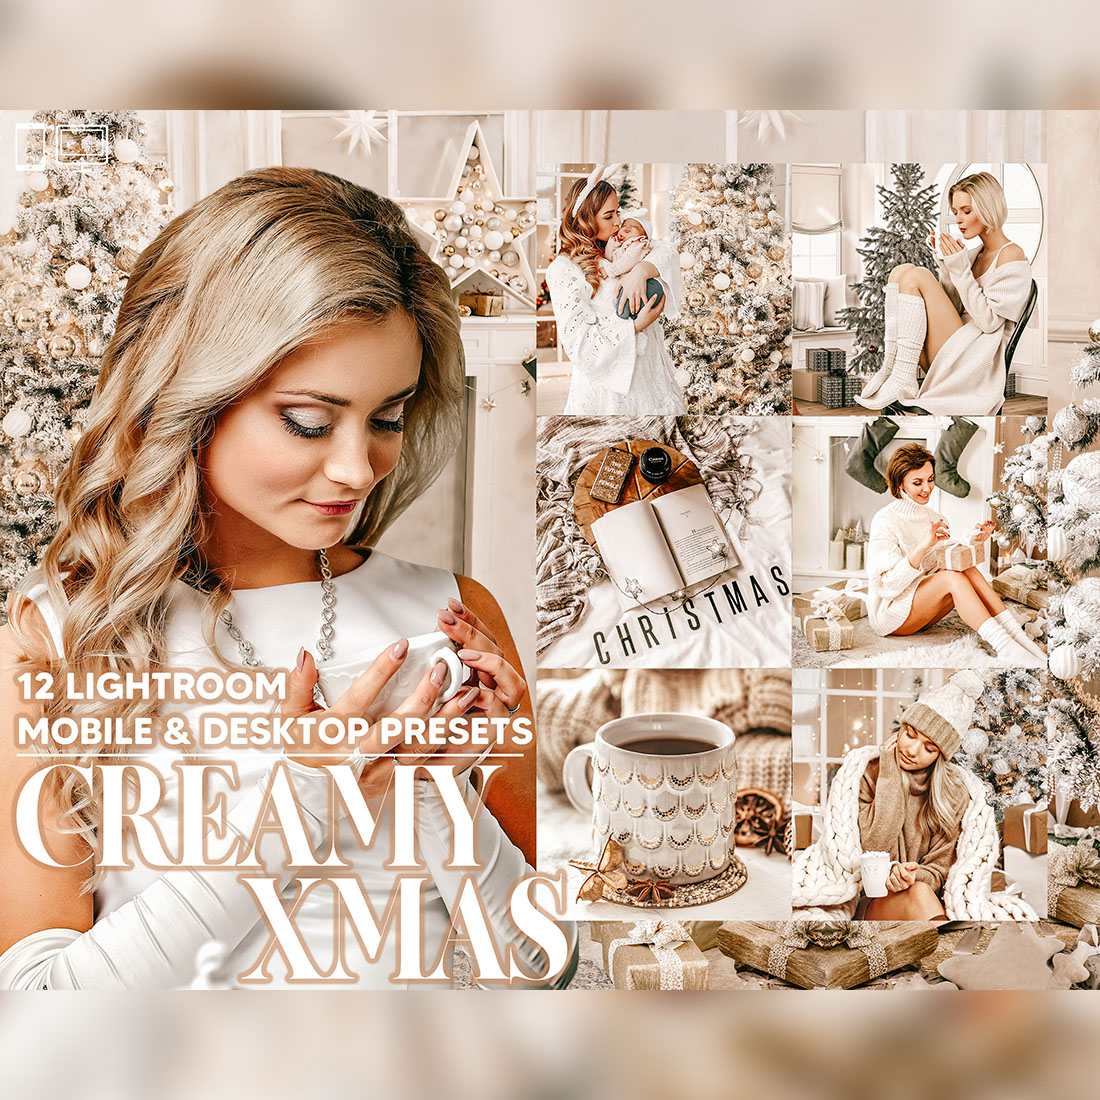 12 Creamy Xmas Lightroom Presets, Christmas Mobile Preset, Winter Desktop, Blogger And Lifestyle Theme Instagram LR Filter DNG Portrait cover image.